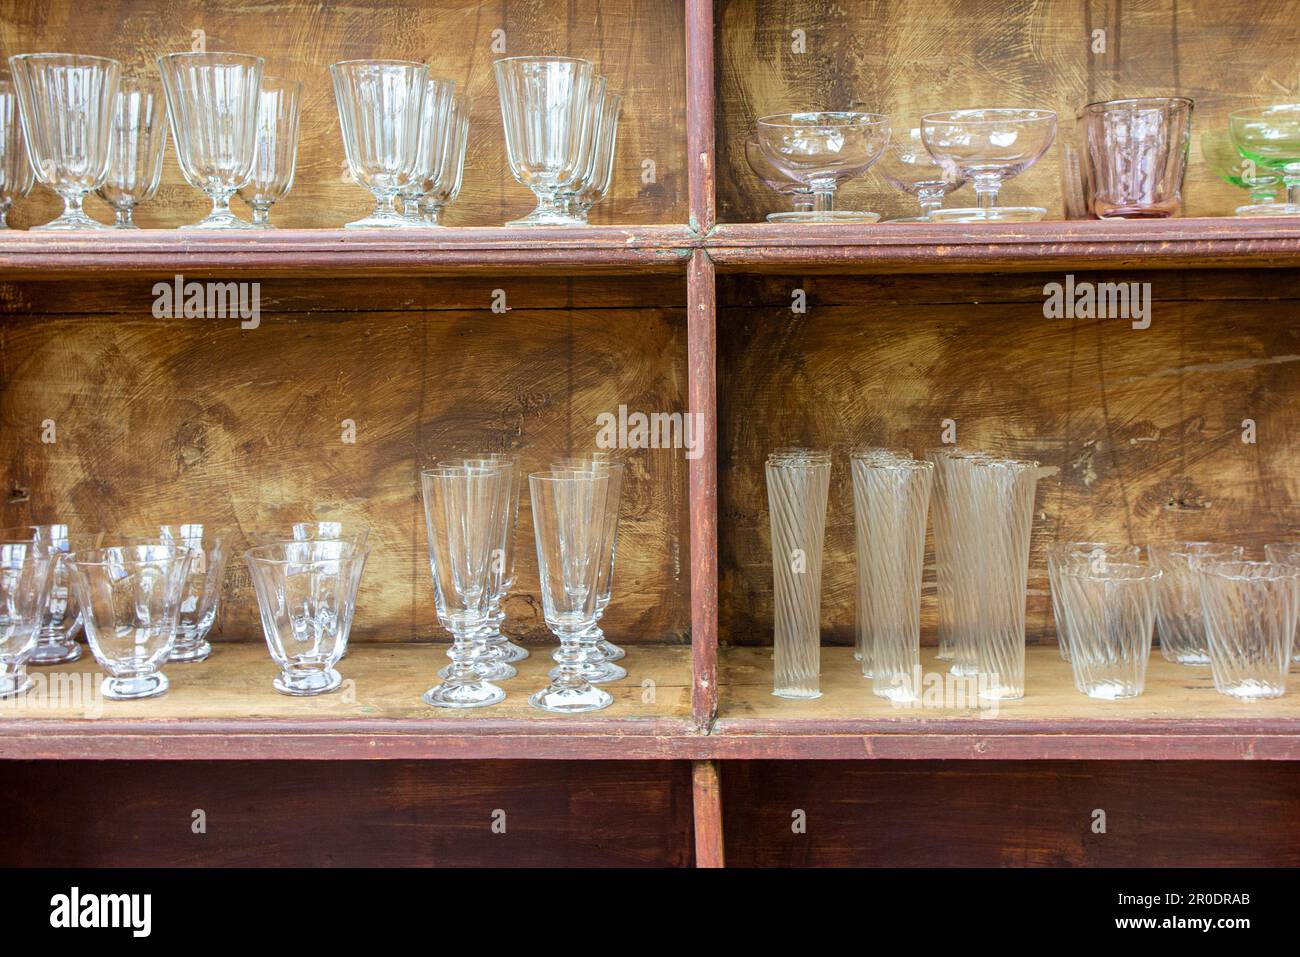 Glassesware for sale on display at Petersham Nursuries Stock Photo